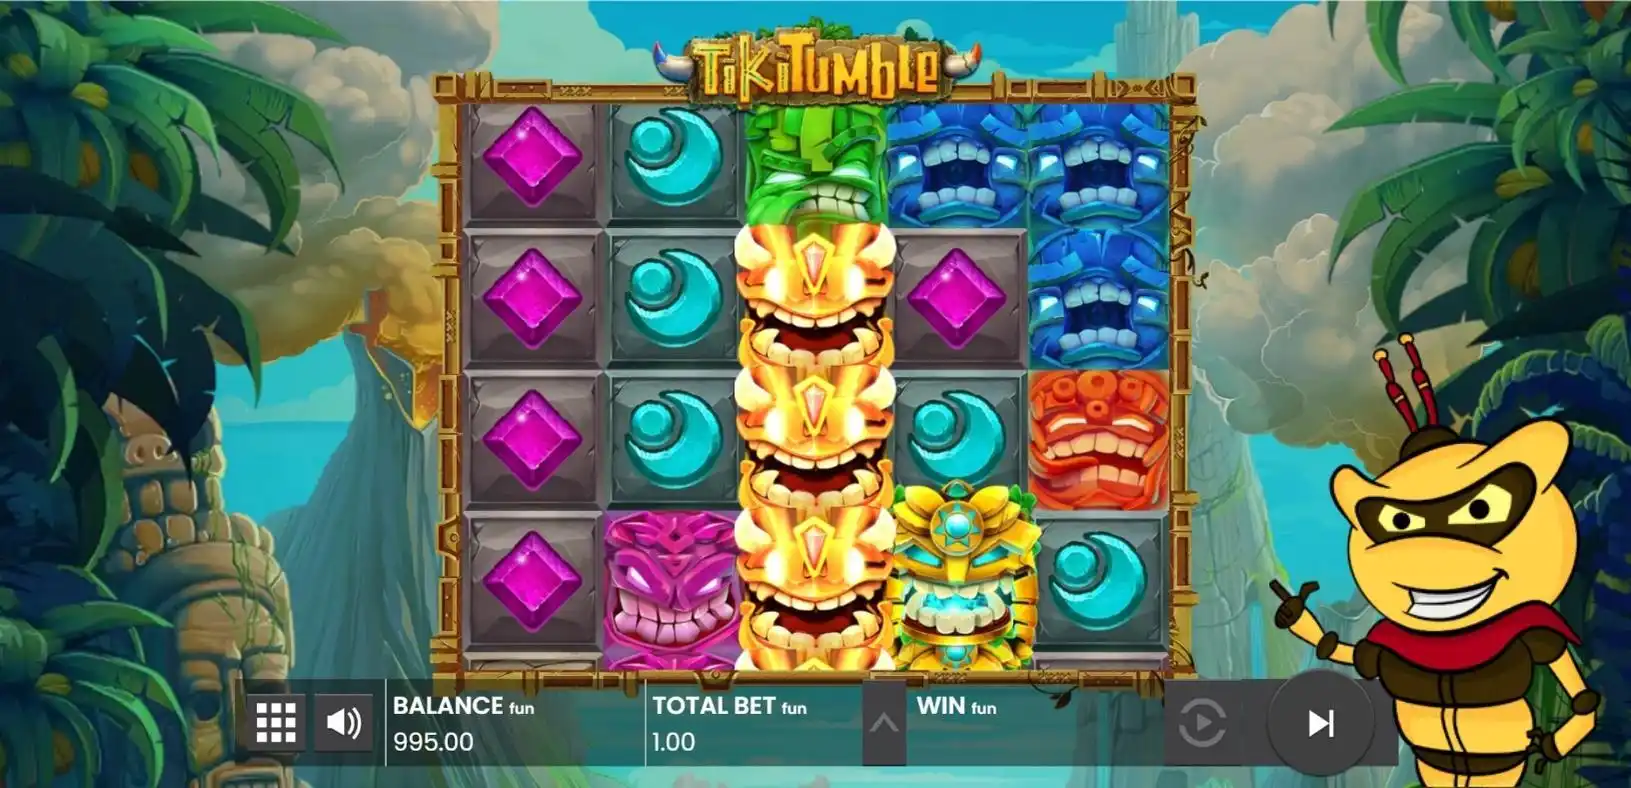 Tiki Tumble Gameplay und Design
